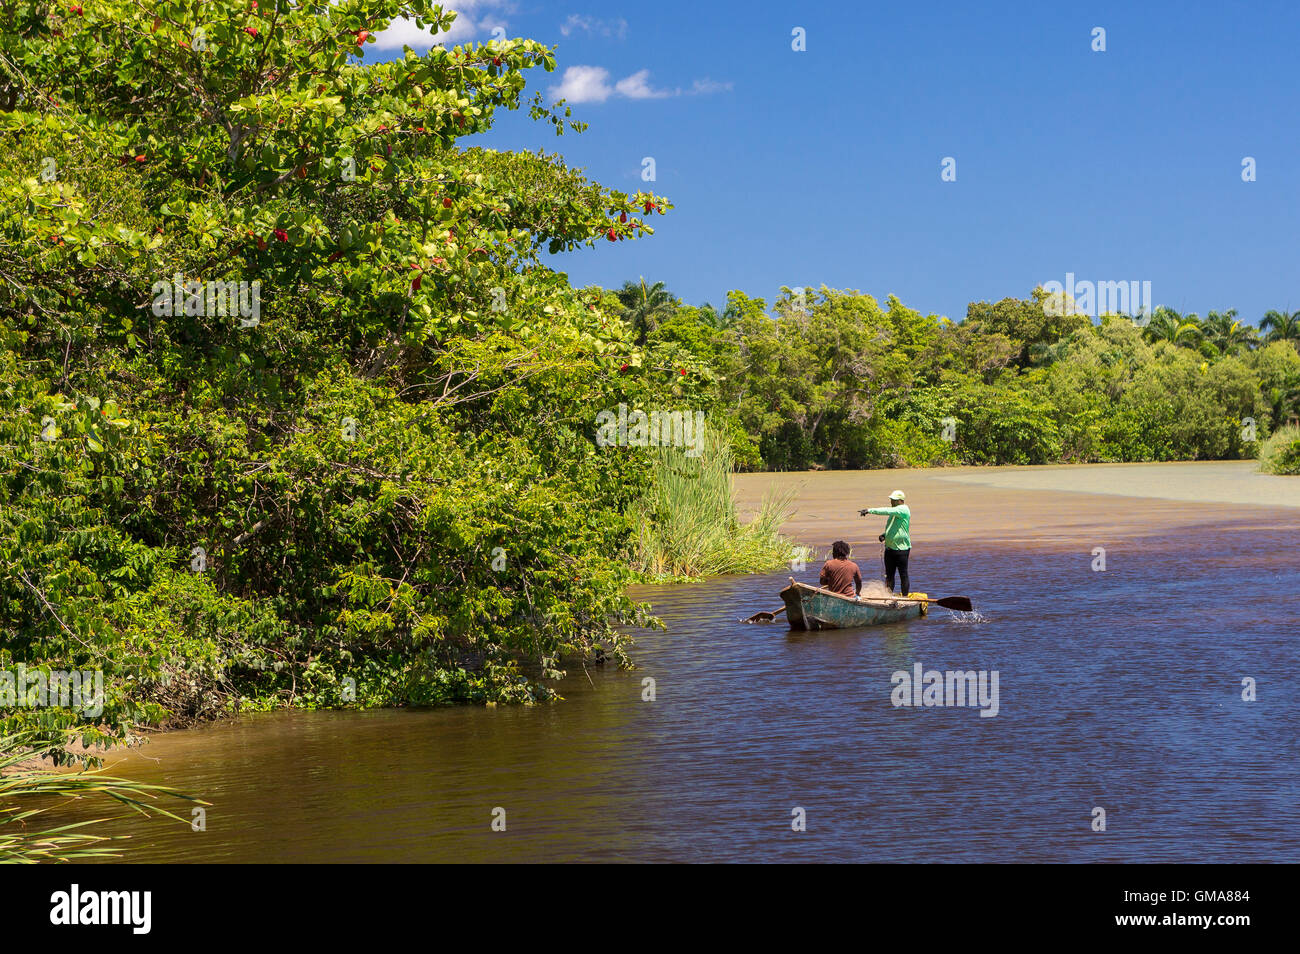 DOMINICAN REPUBLIC - Fishermen in rowboat on Yasica River Stock Photo